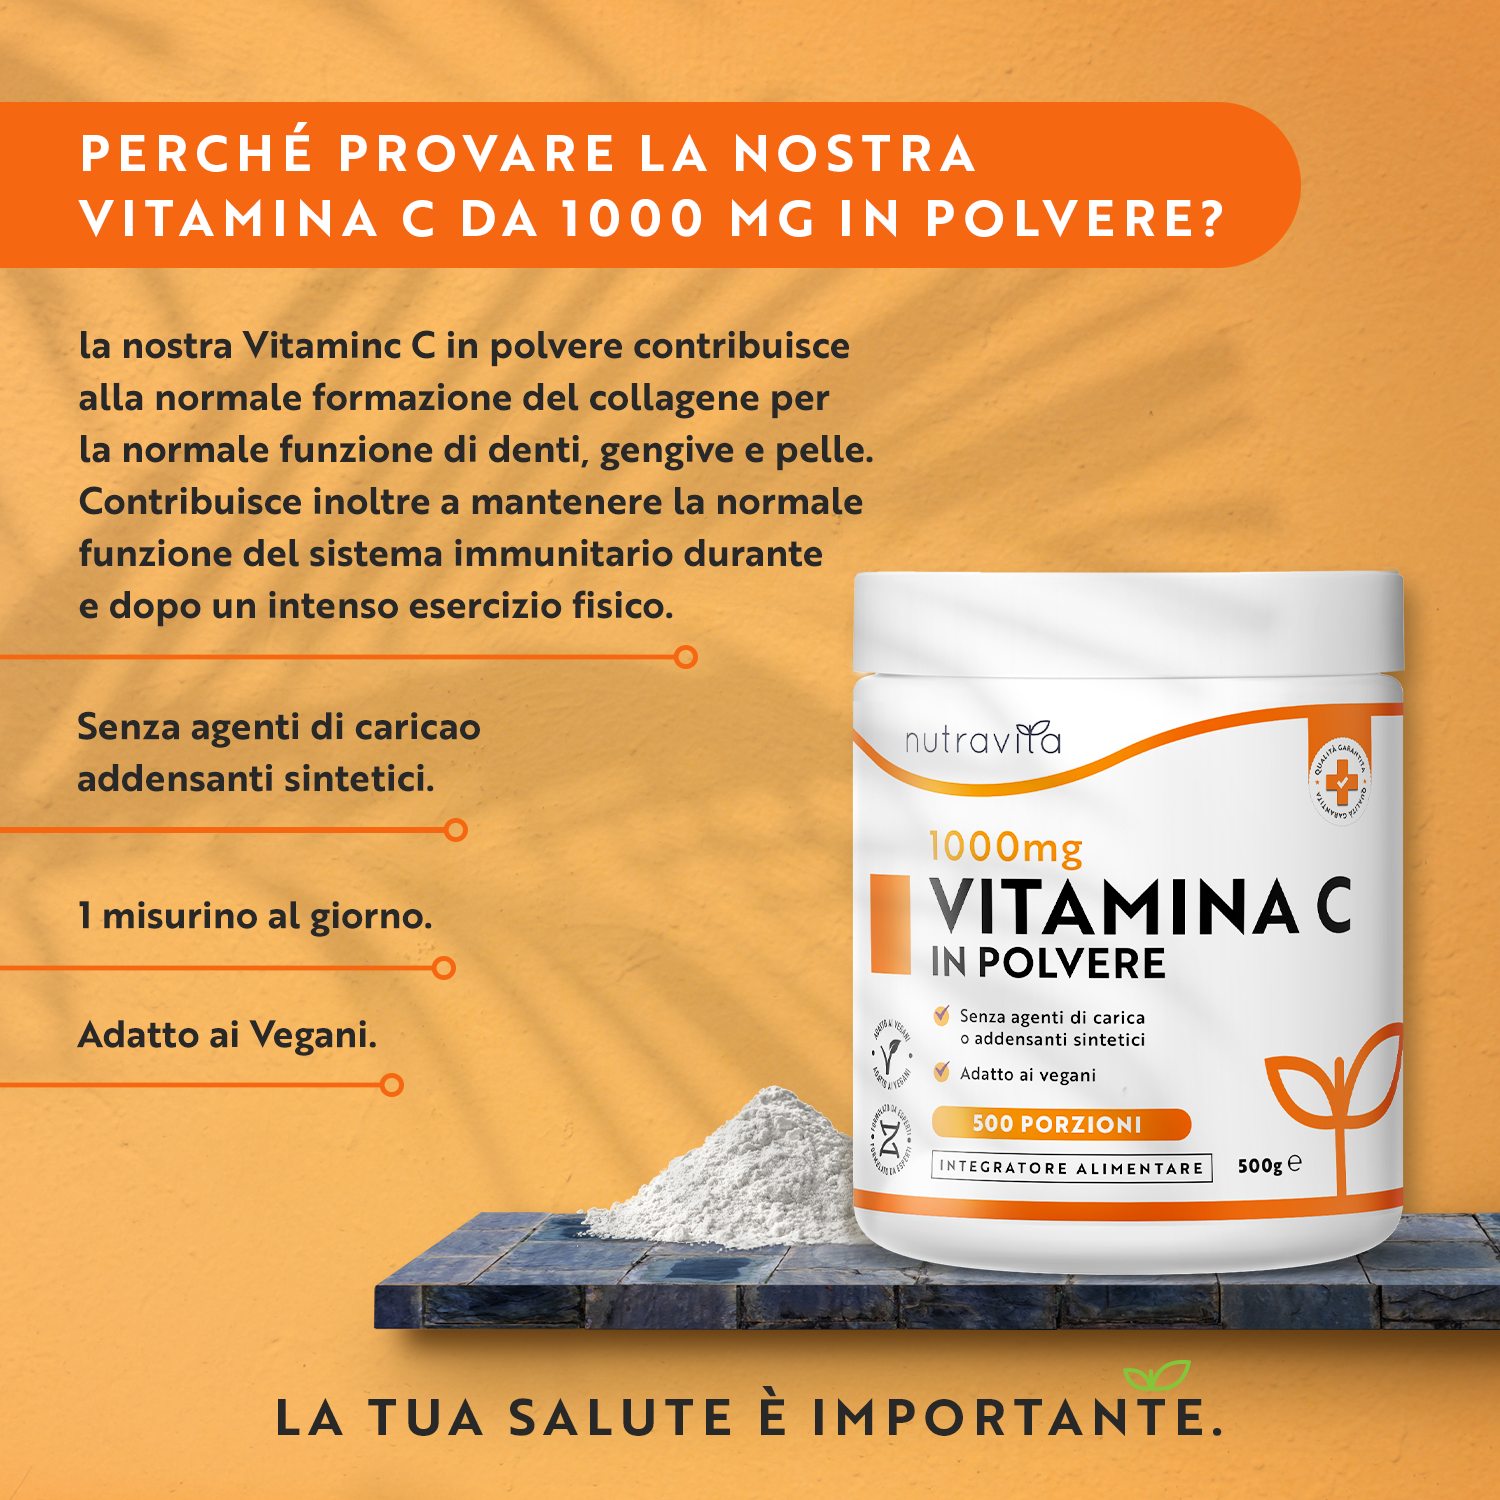 Vitamina C in Polvere 500 g - 1000 mg di Vitamina C Per Porzione